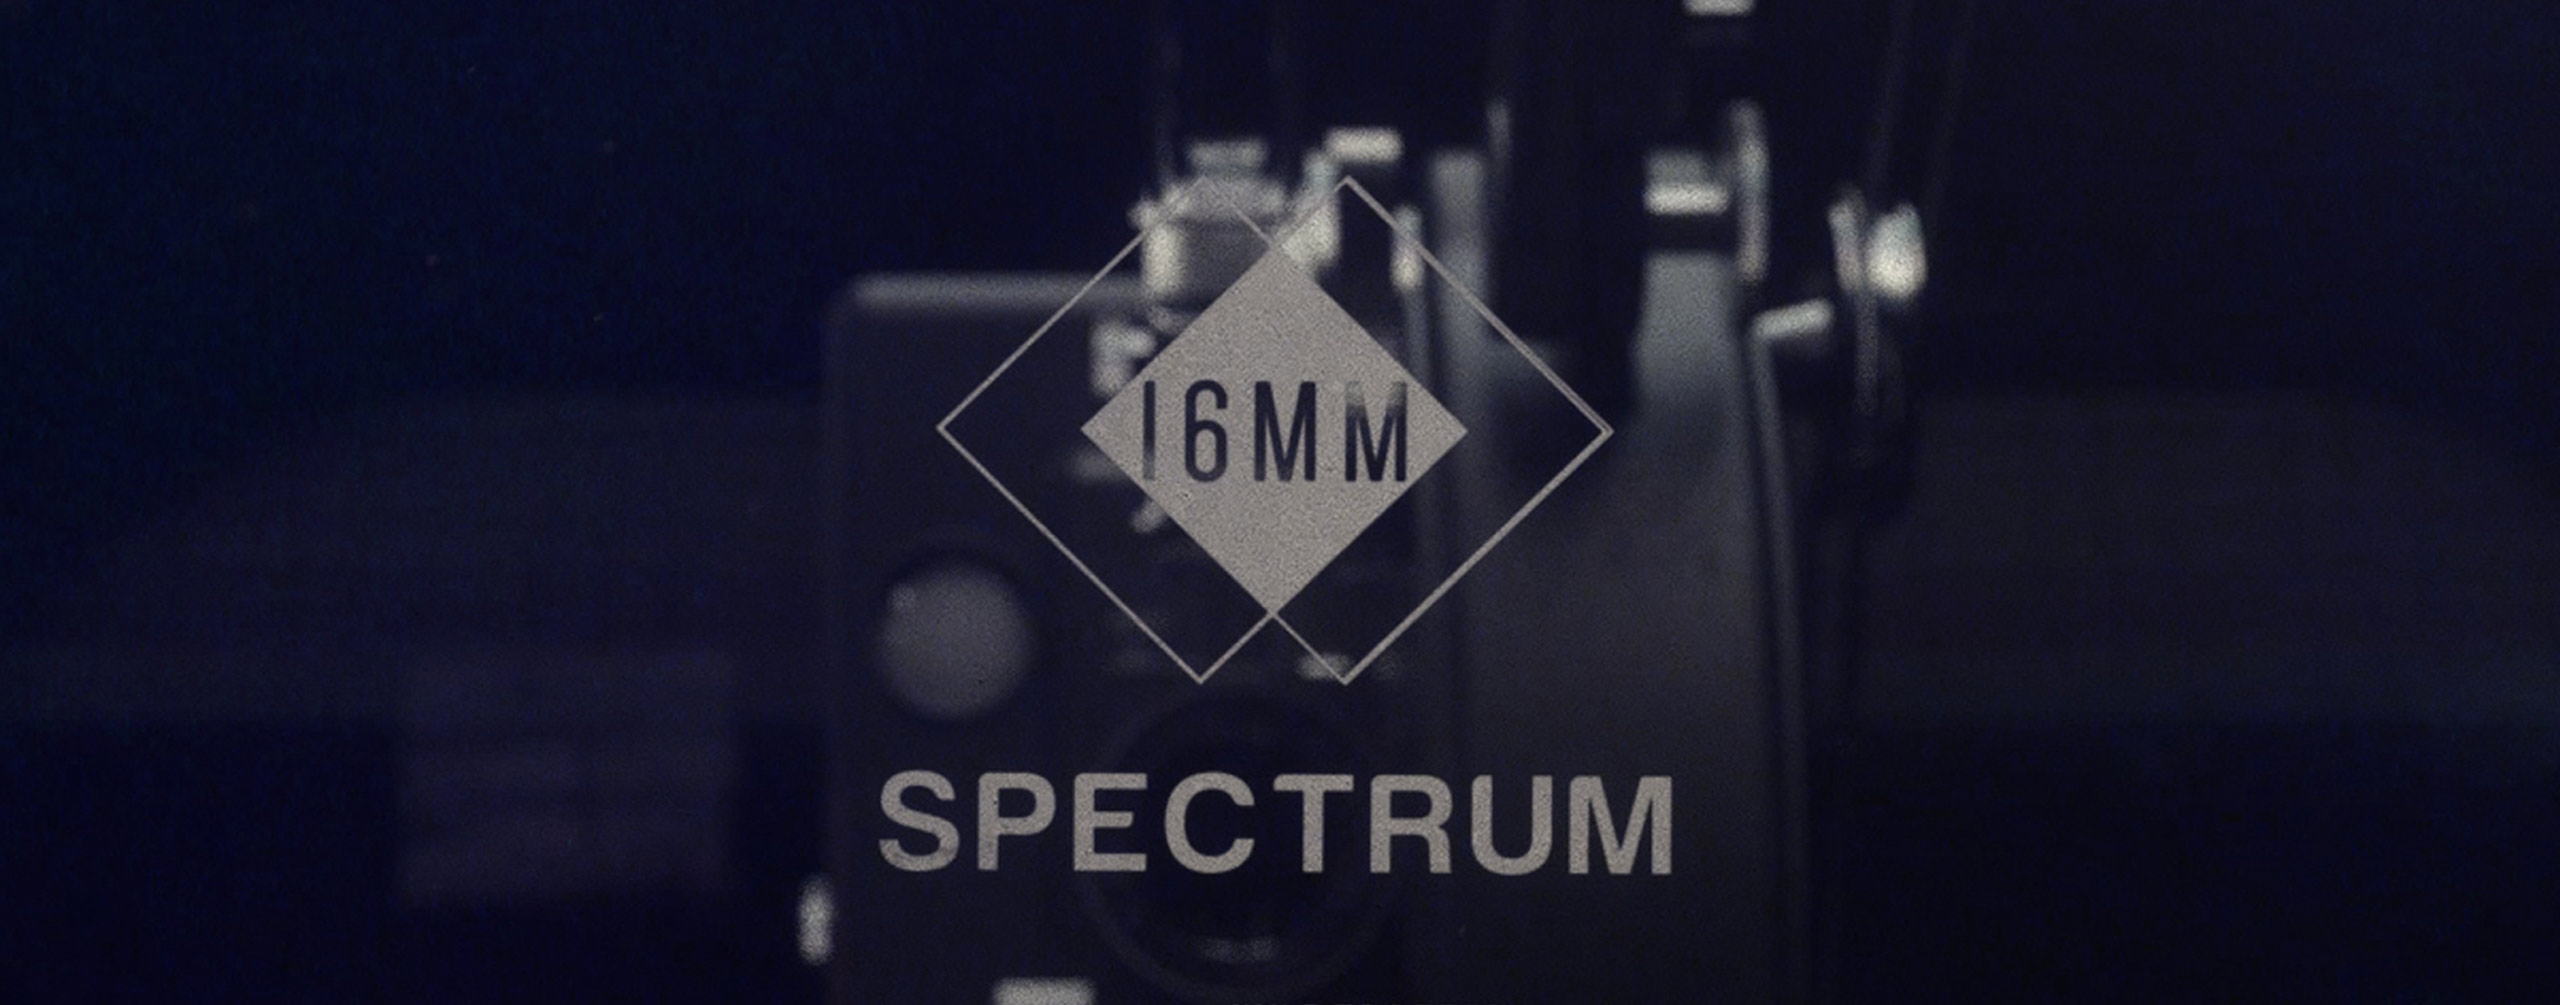 Spectrum 16mm - Vintage Film Overlay Effects